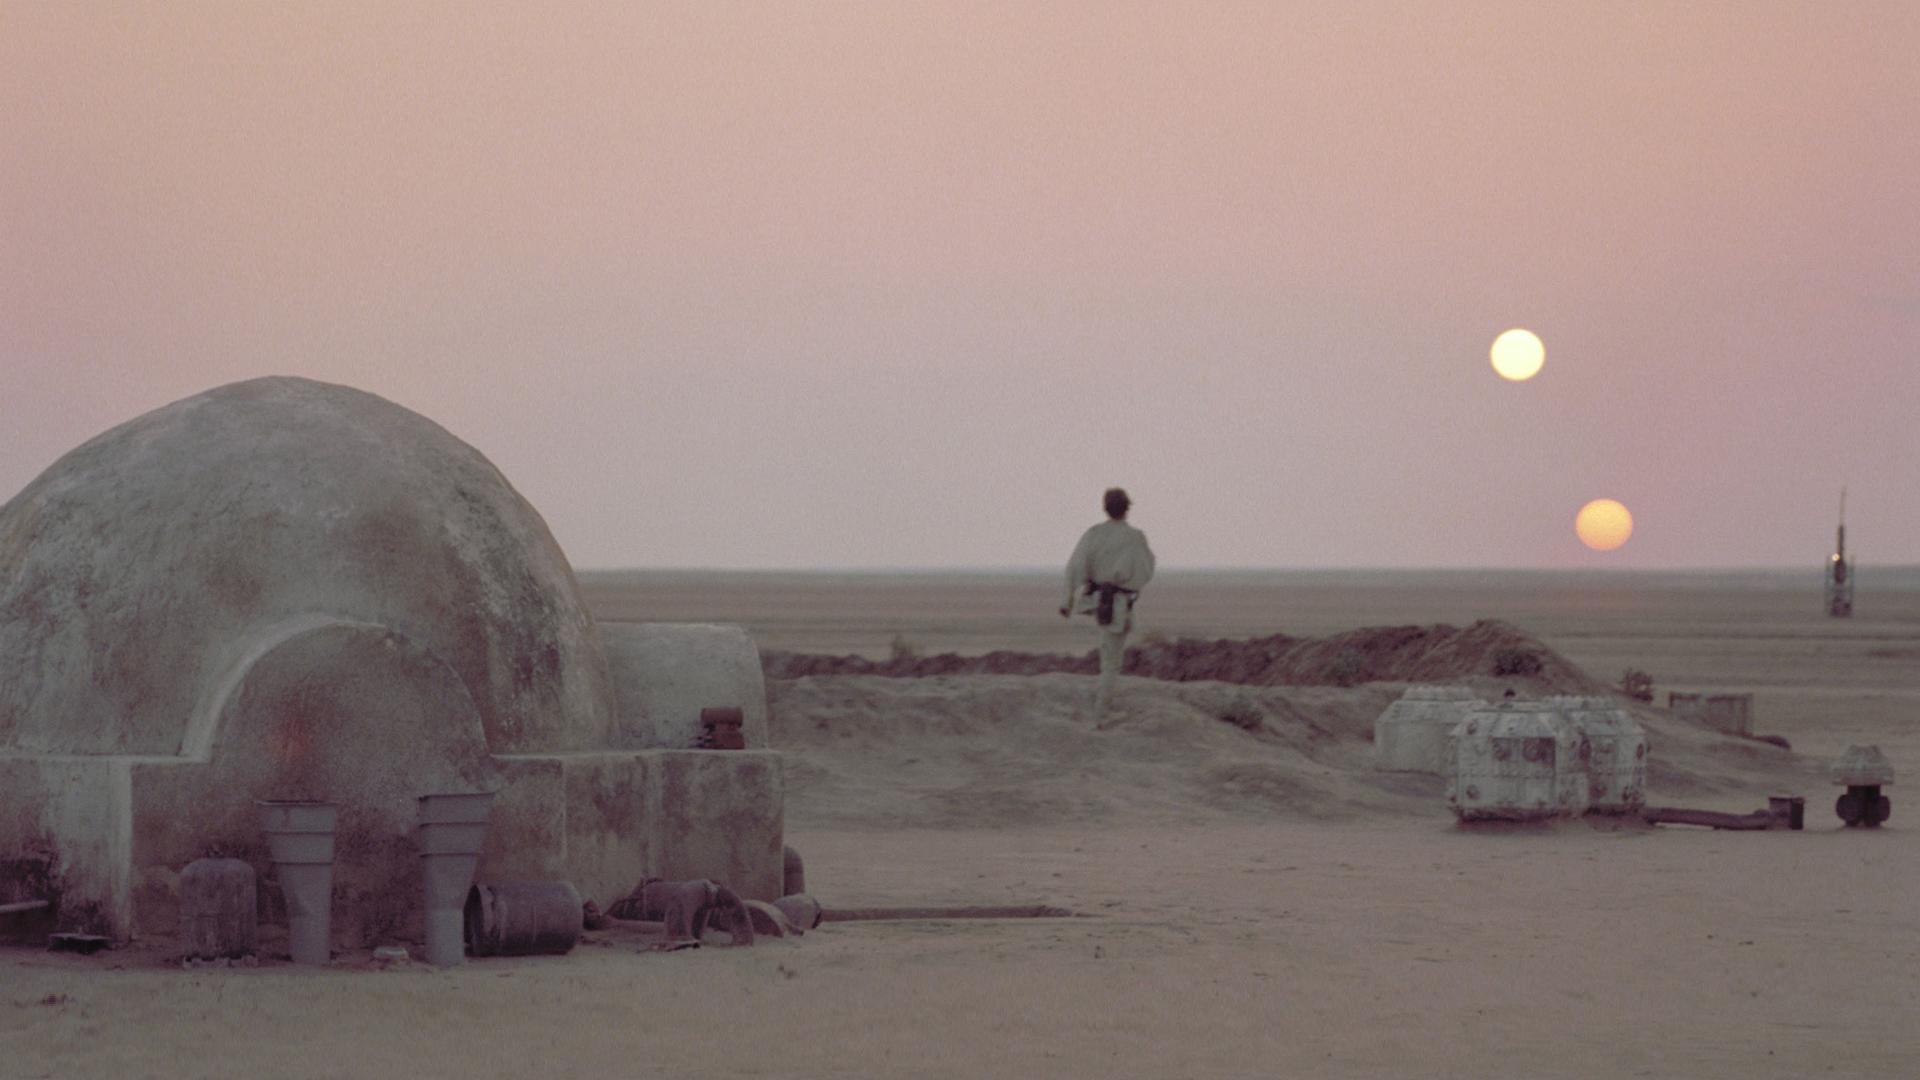 Classic Star Wars Luke on Tatooine [1920x1080] iimgurcom